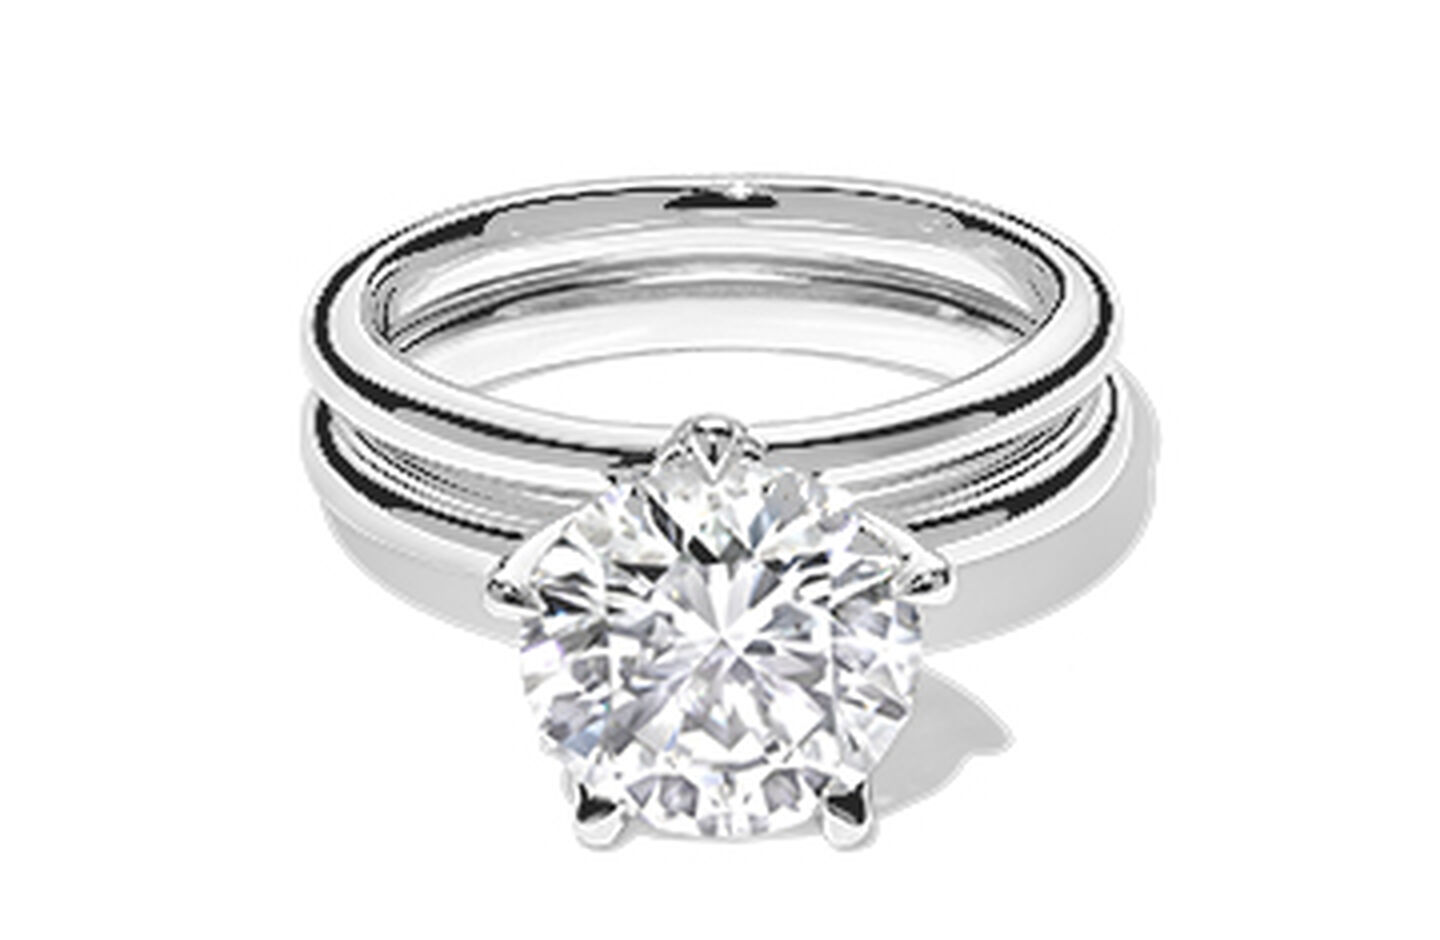 Birks North Star Round Solitaire Diamond Engagement Ring